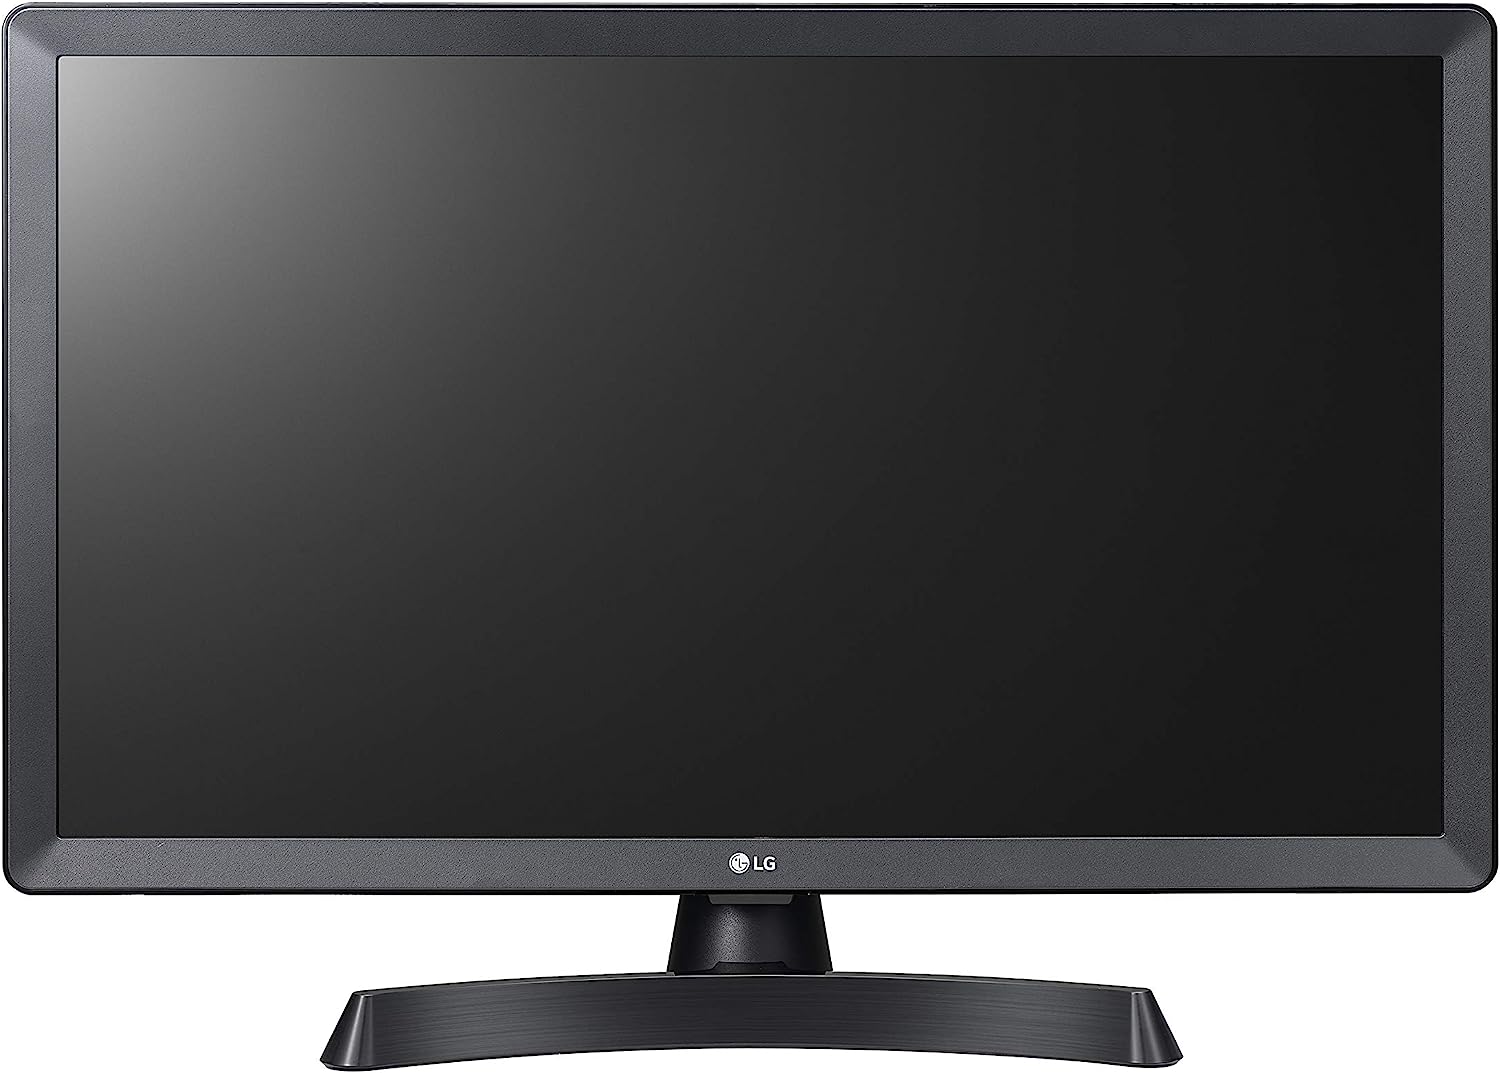 LG Electronics 24LM530S-PU 24-Inch HD webOS 3.5 Smart TV